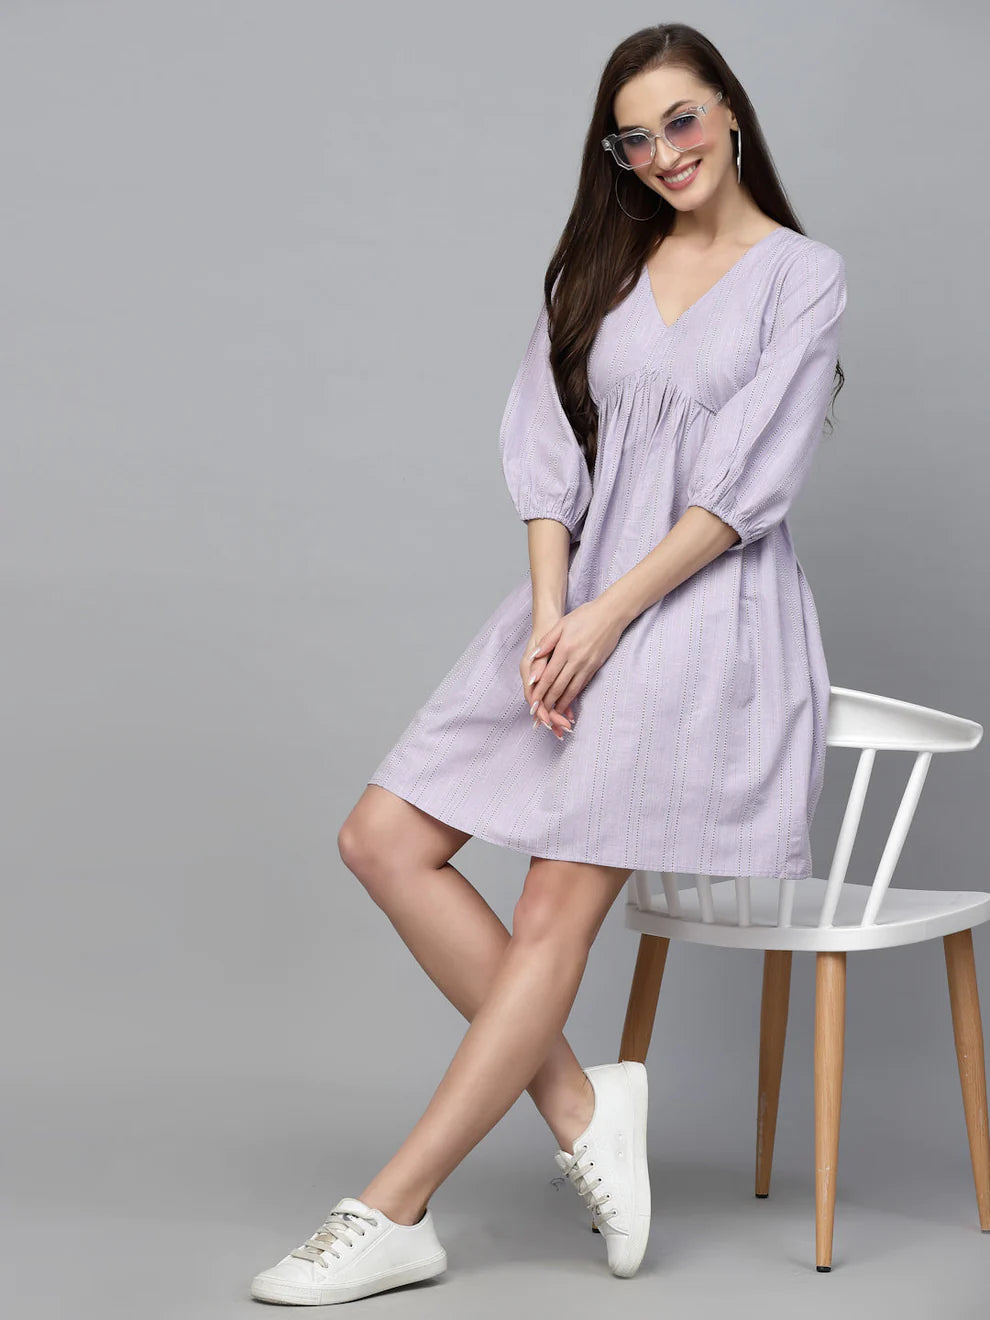 Woven style purple flared dress